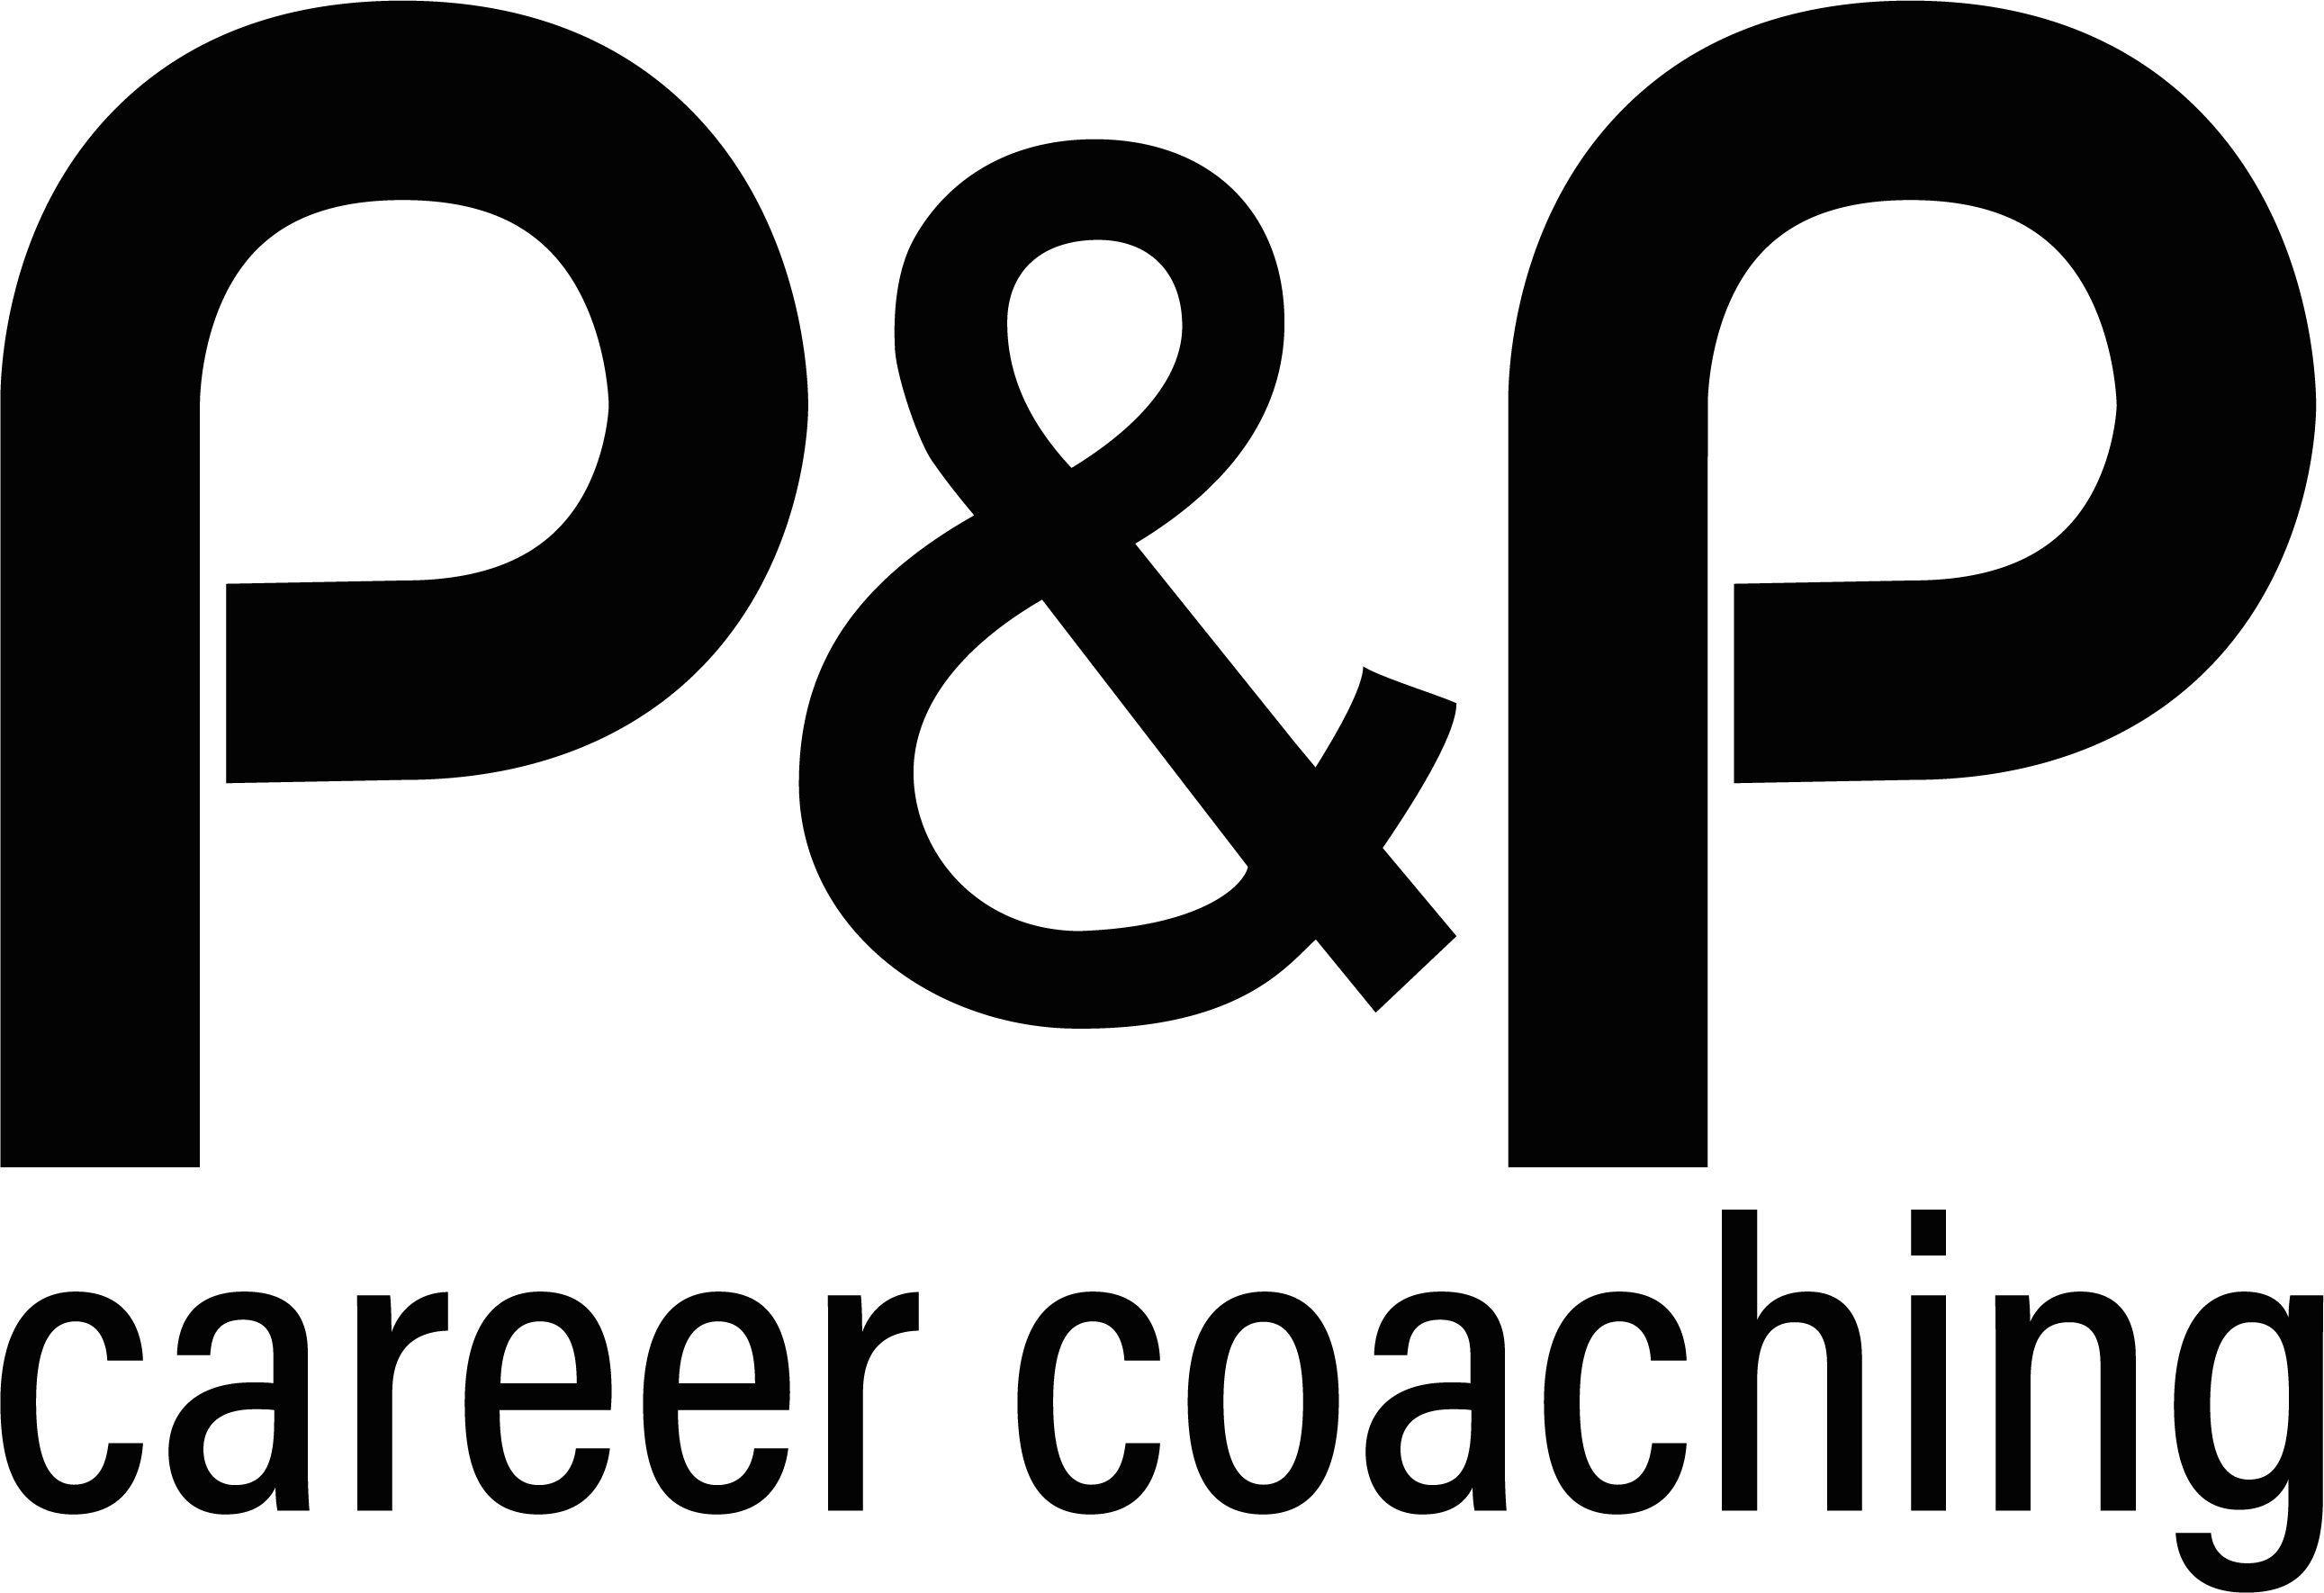 Parent and Professional Career Coaching